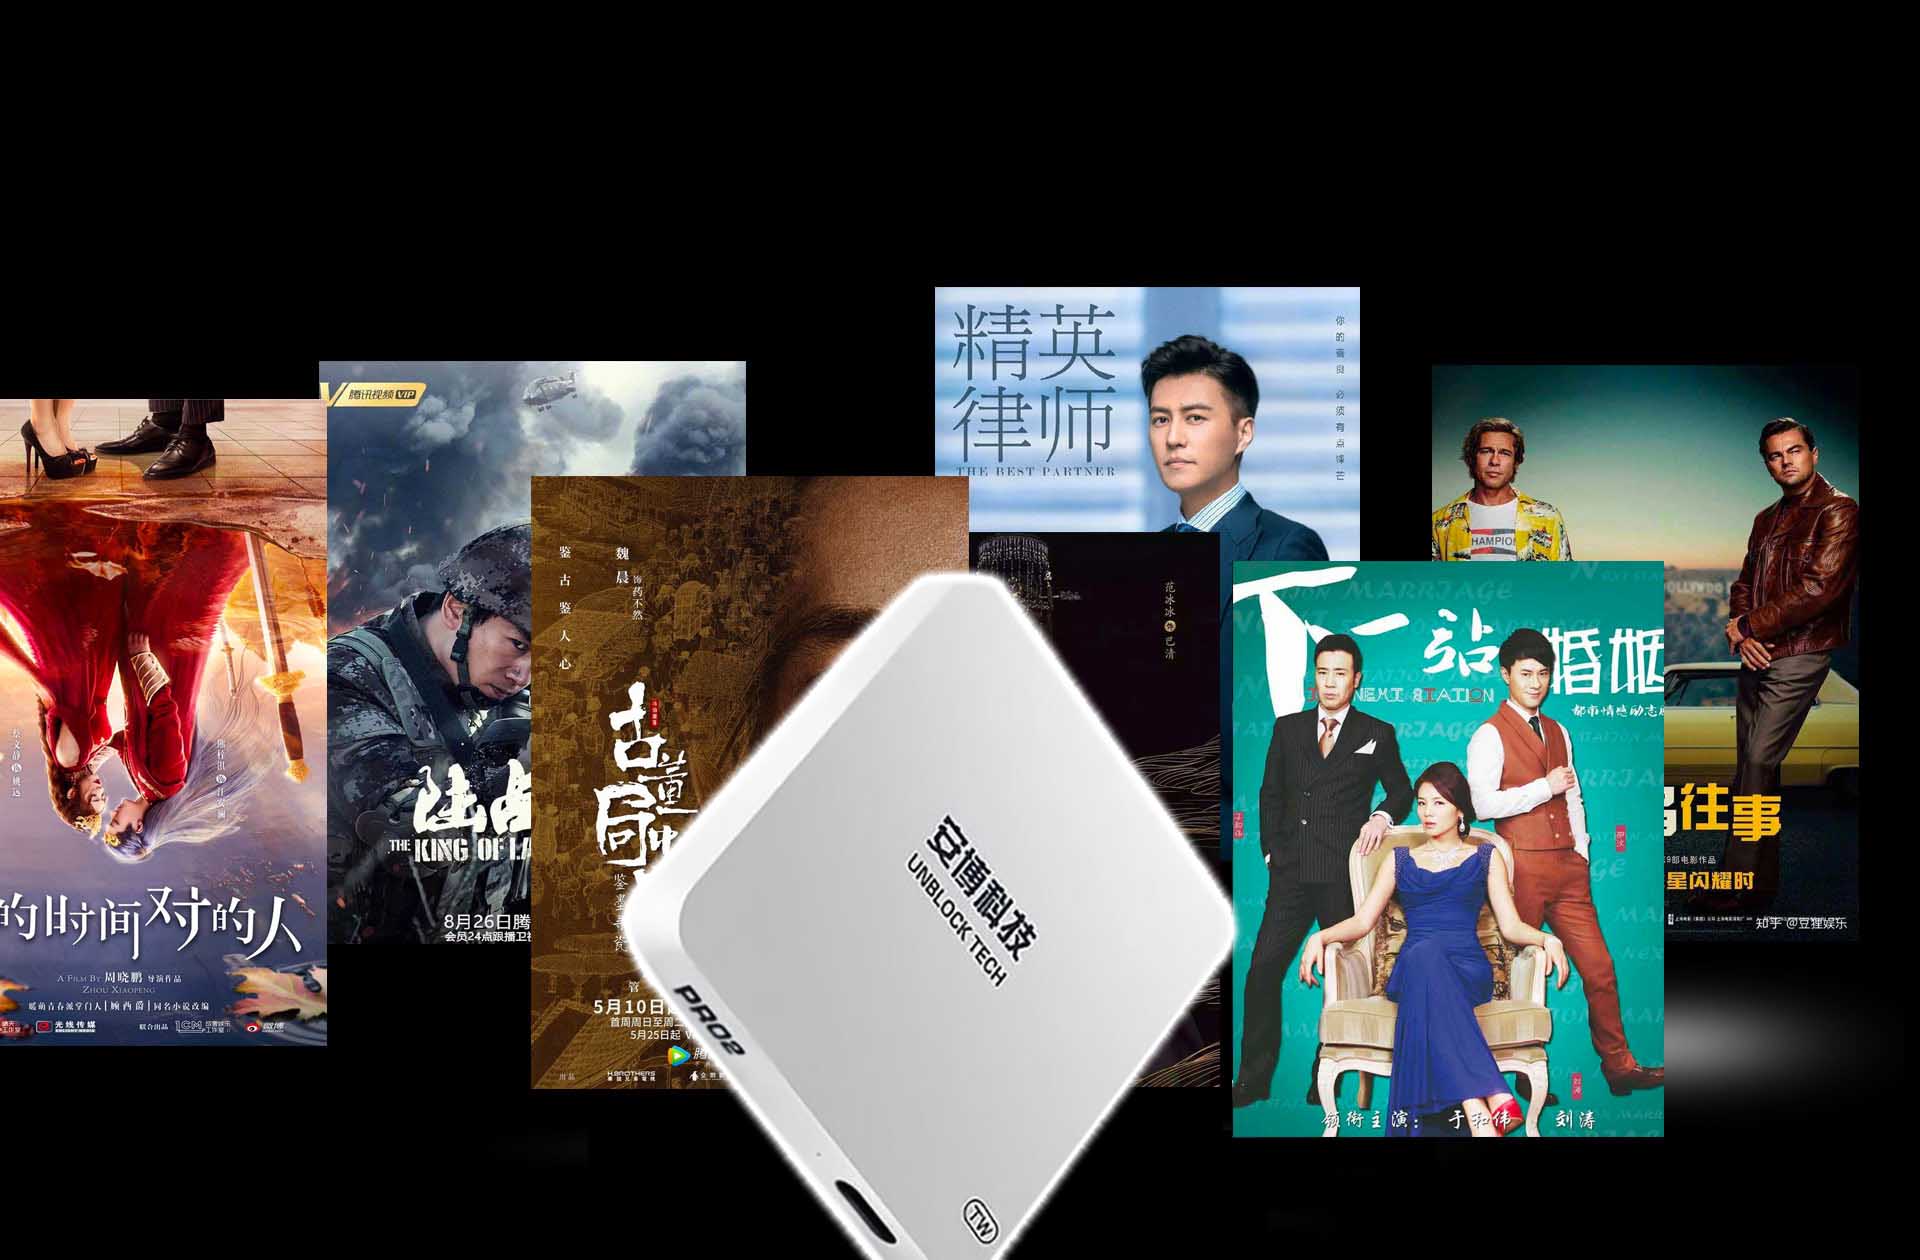 UBOX PROS2 - 선택할 수 있는 다양한 영화 및 무료 TV 채널